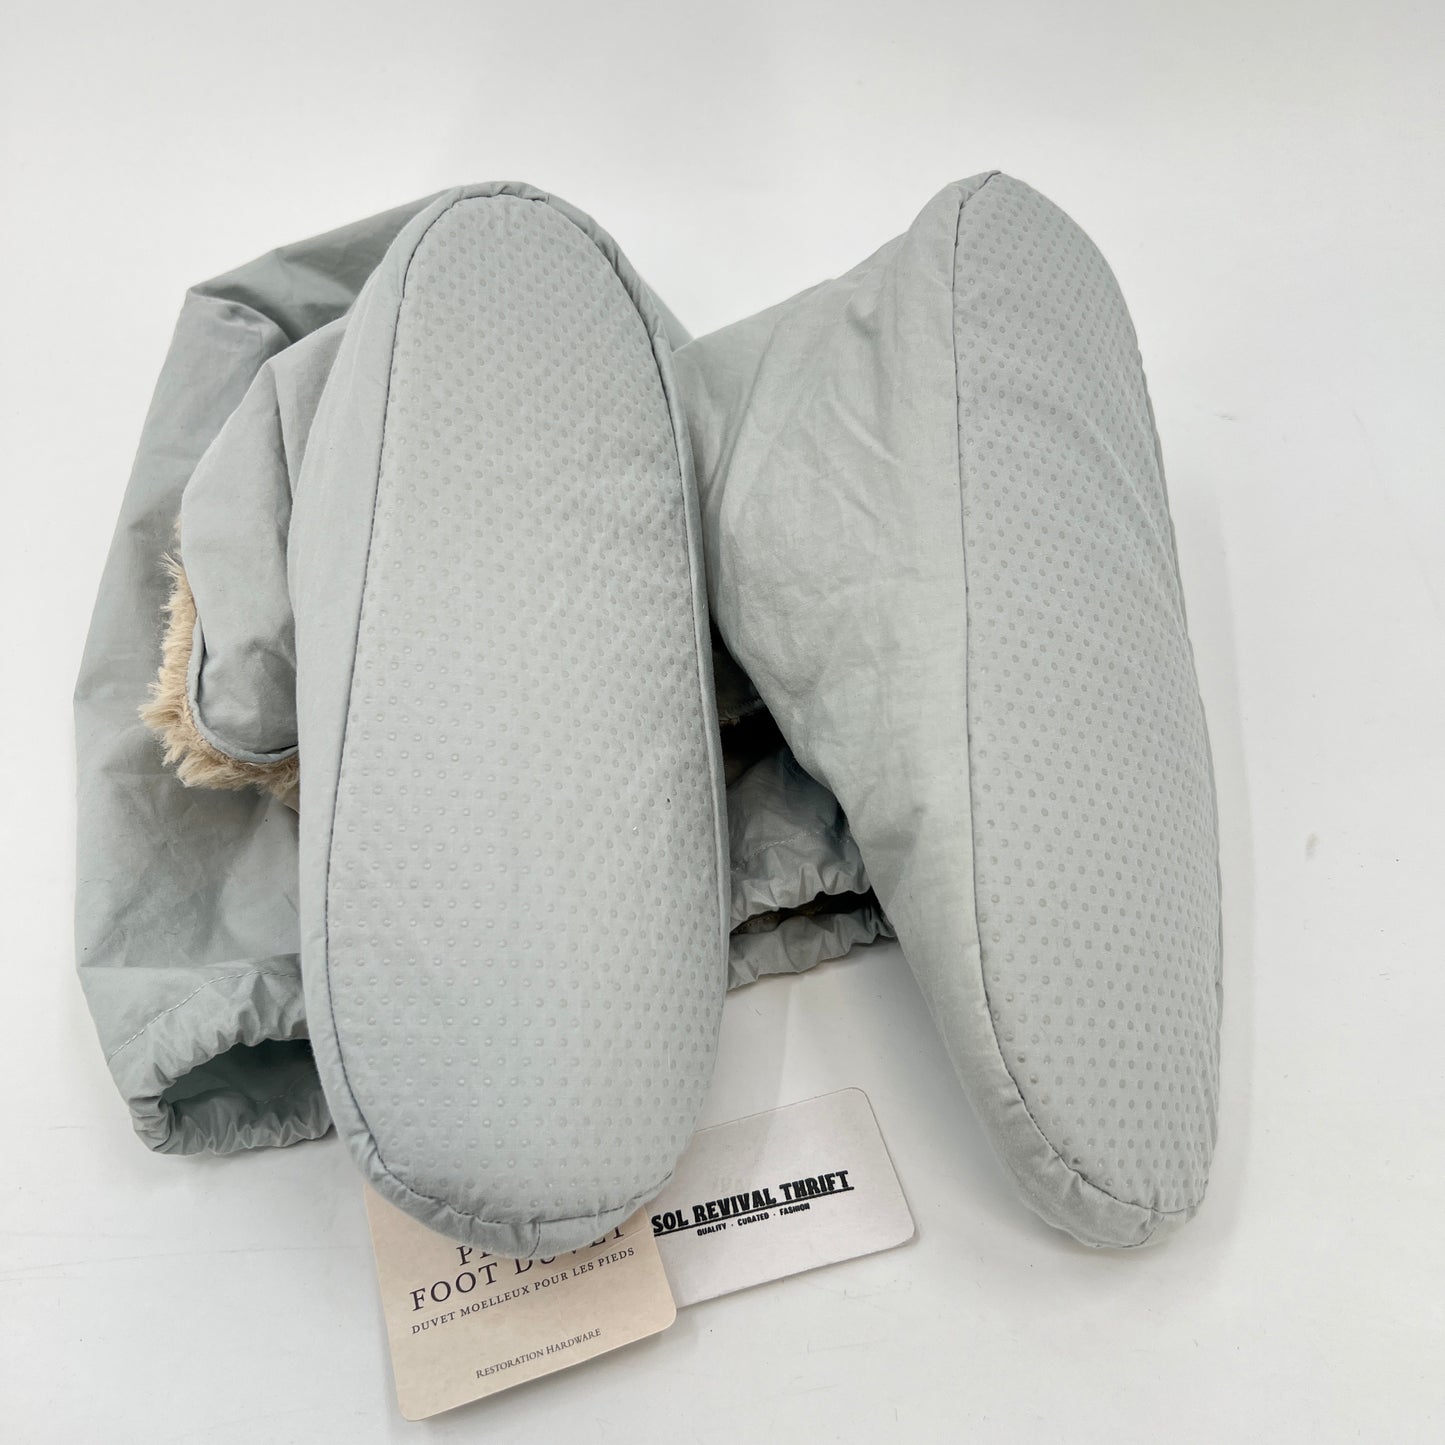 SOLD. Restoration Hardware Plush Foot duvet Slippers Unisex